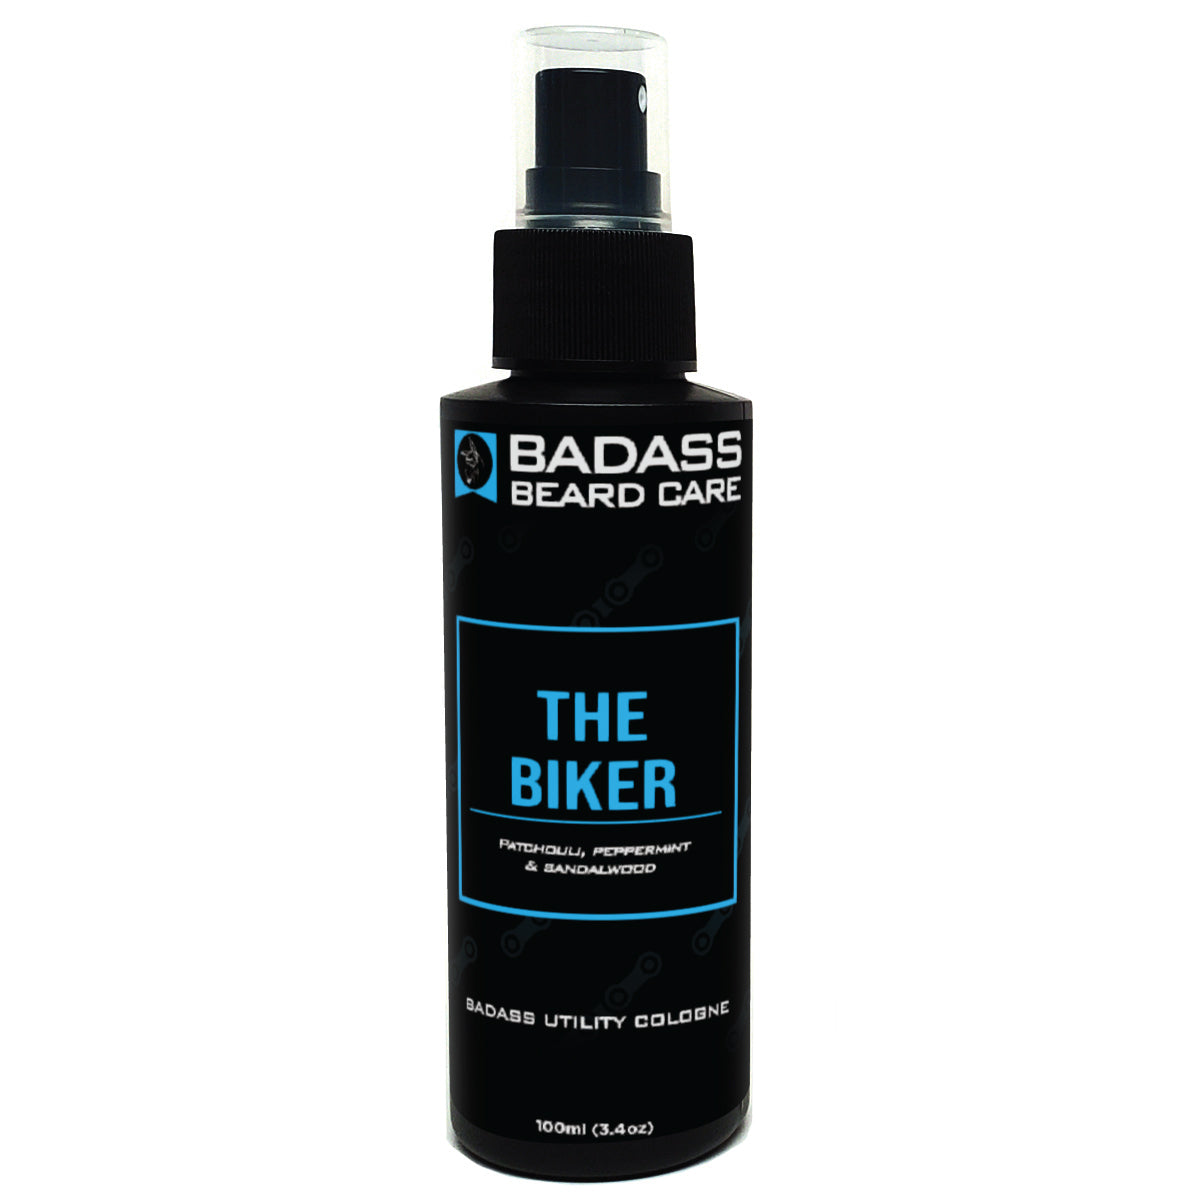 The Biker Badass Utility Cologne